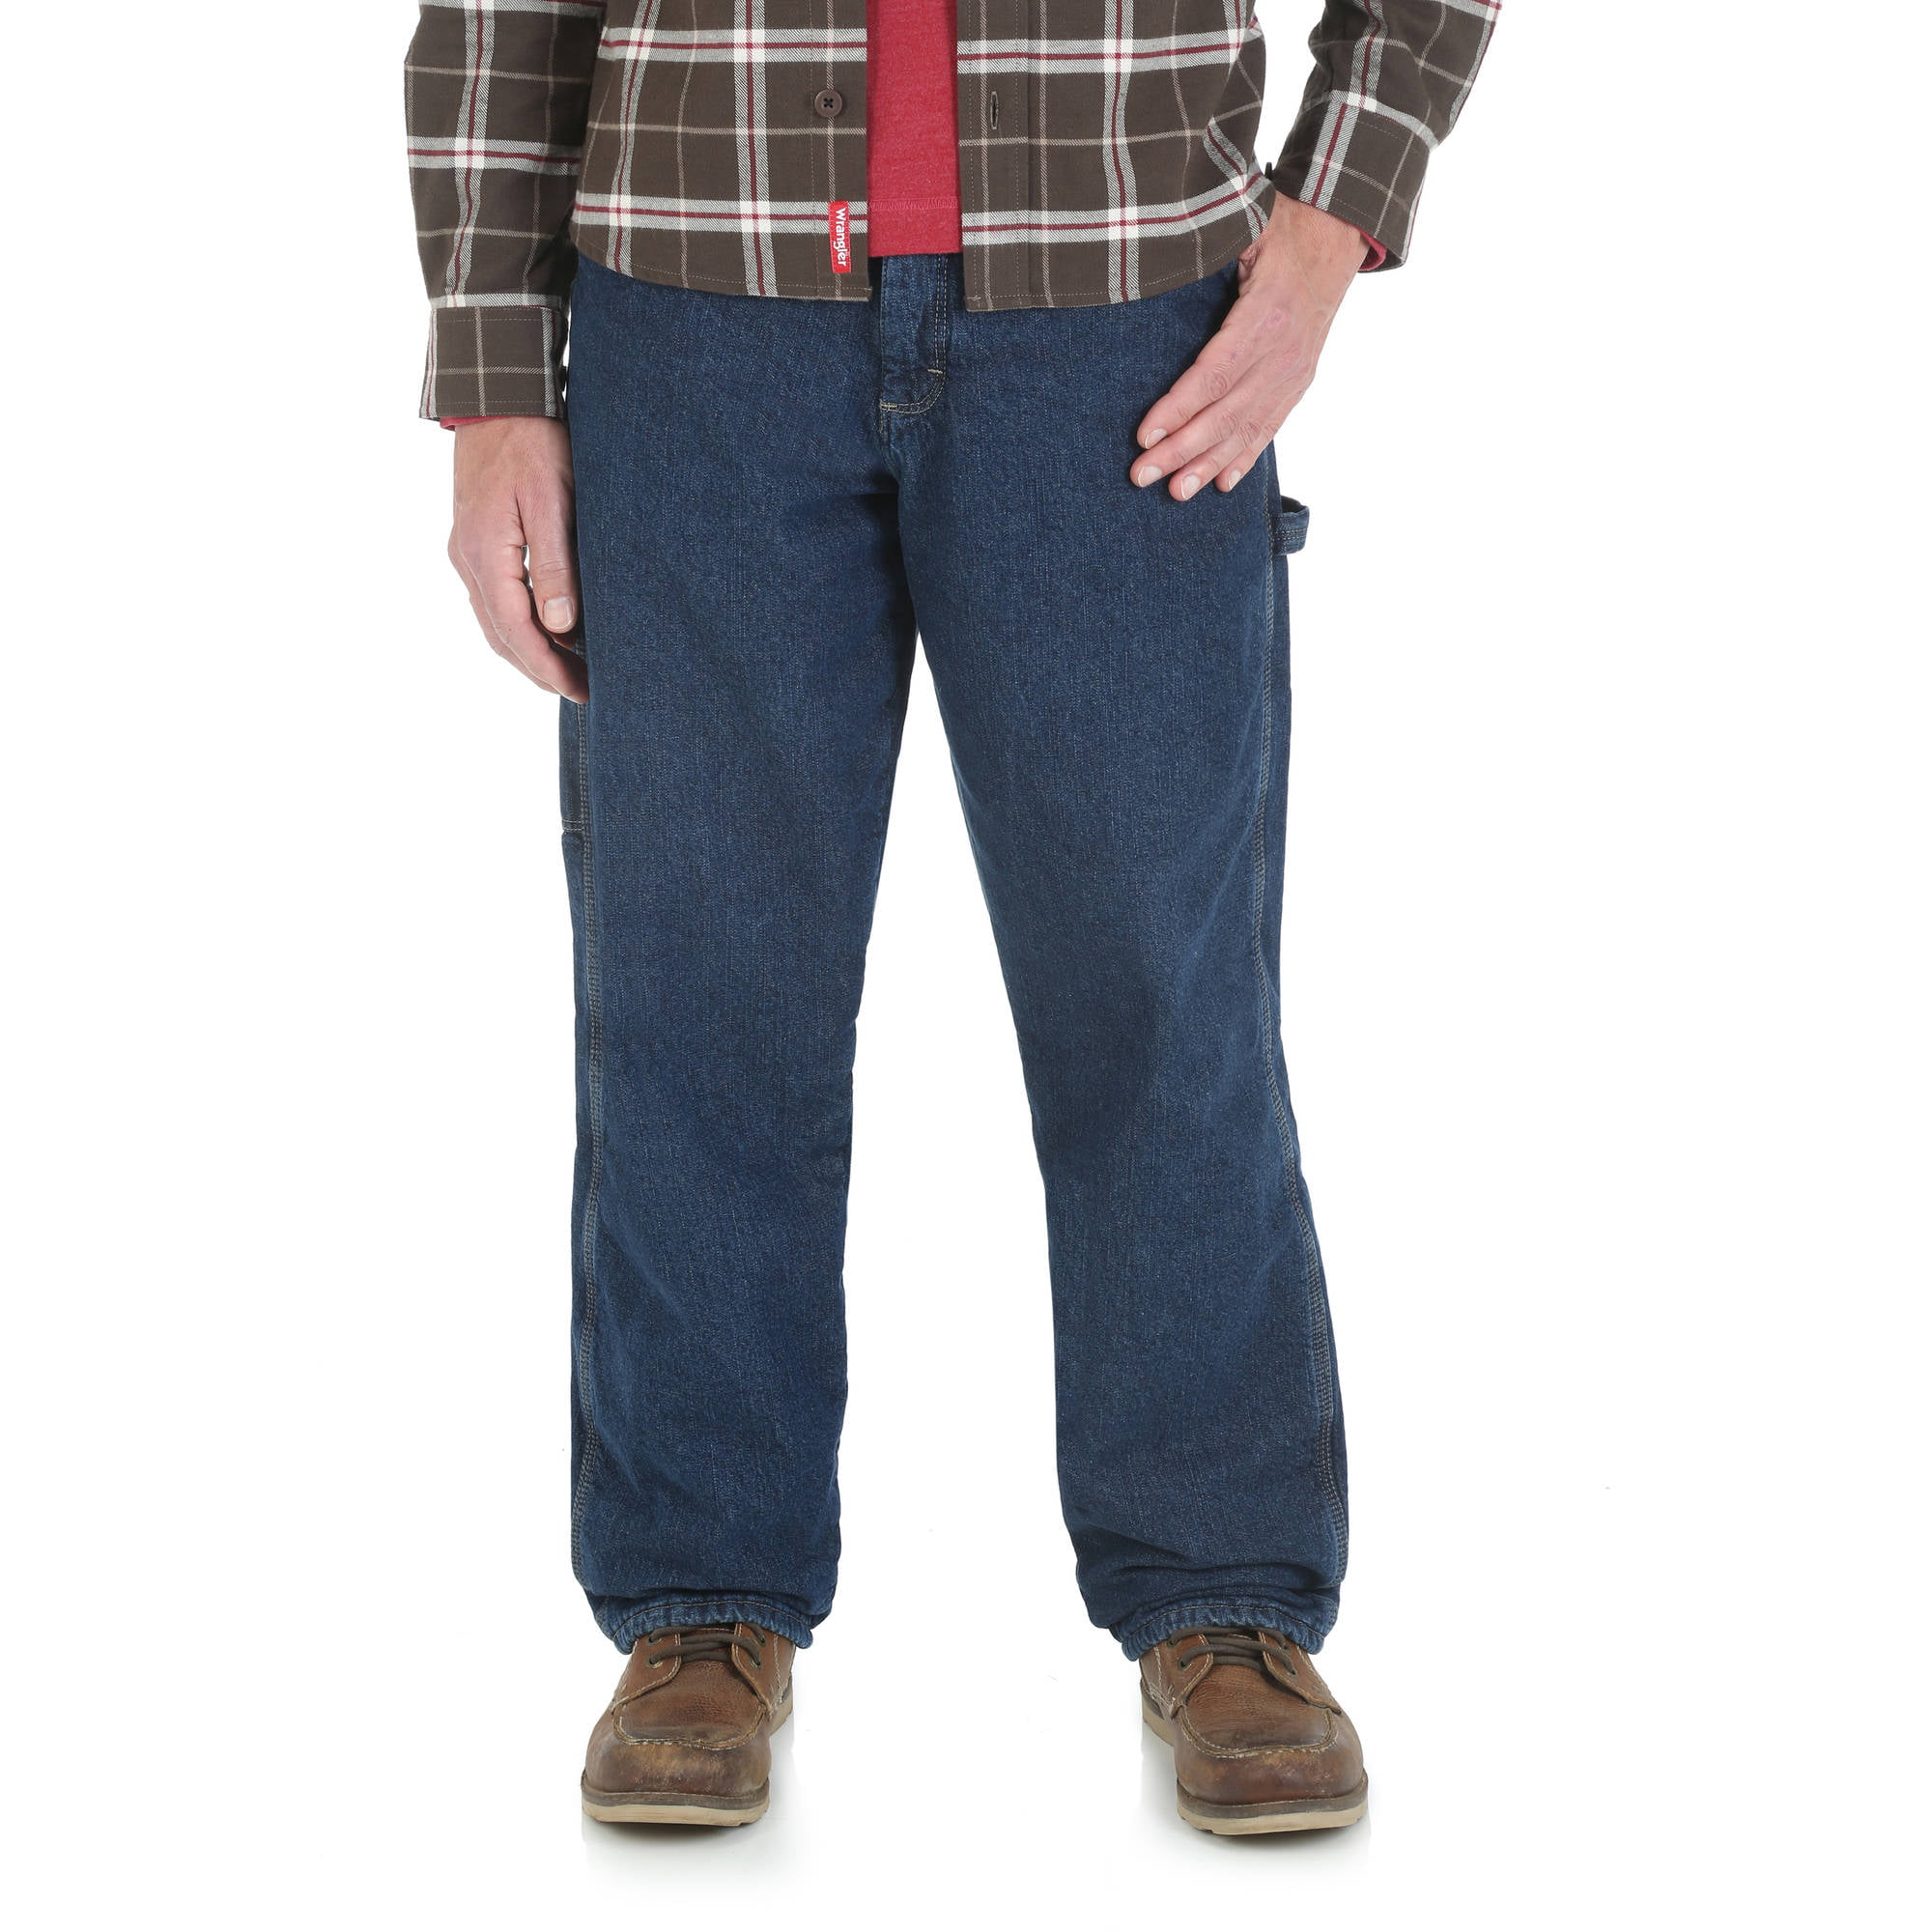 wrangler lined jeans walmart